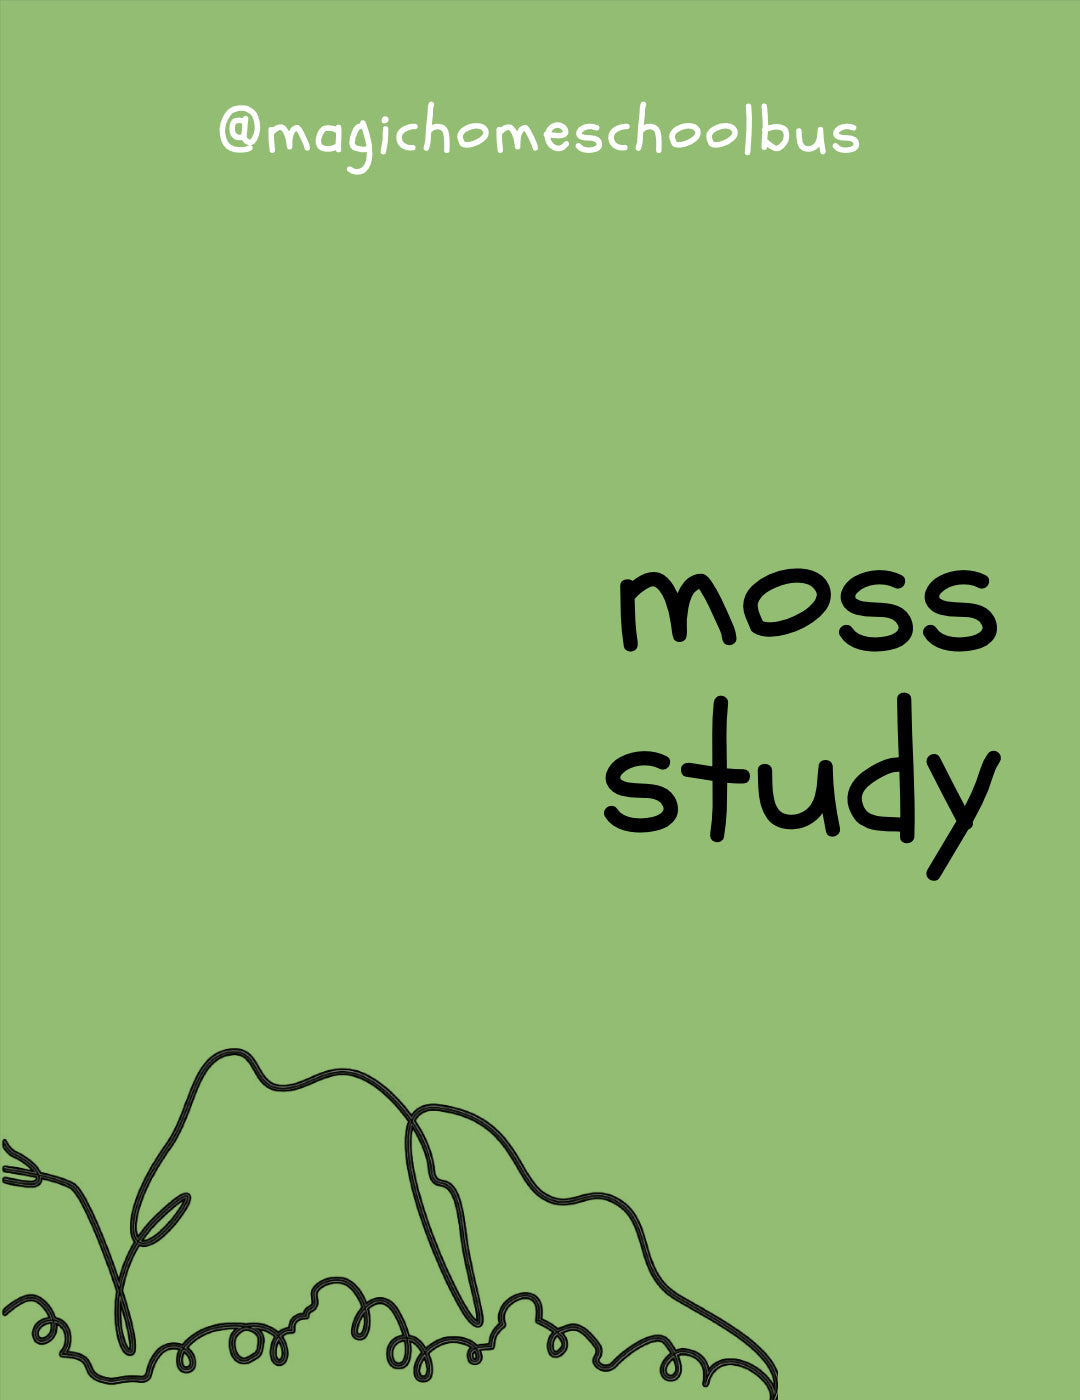 Magic Homeschool Bus - Moss Study